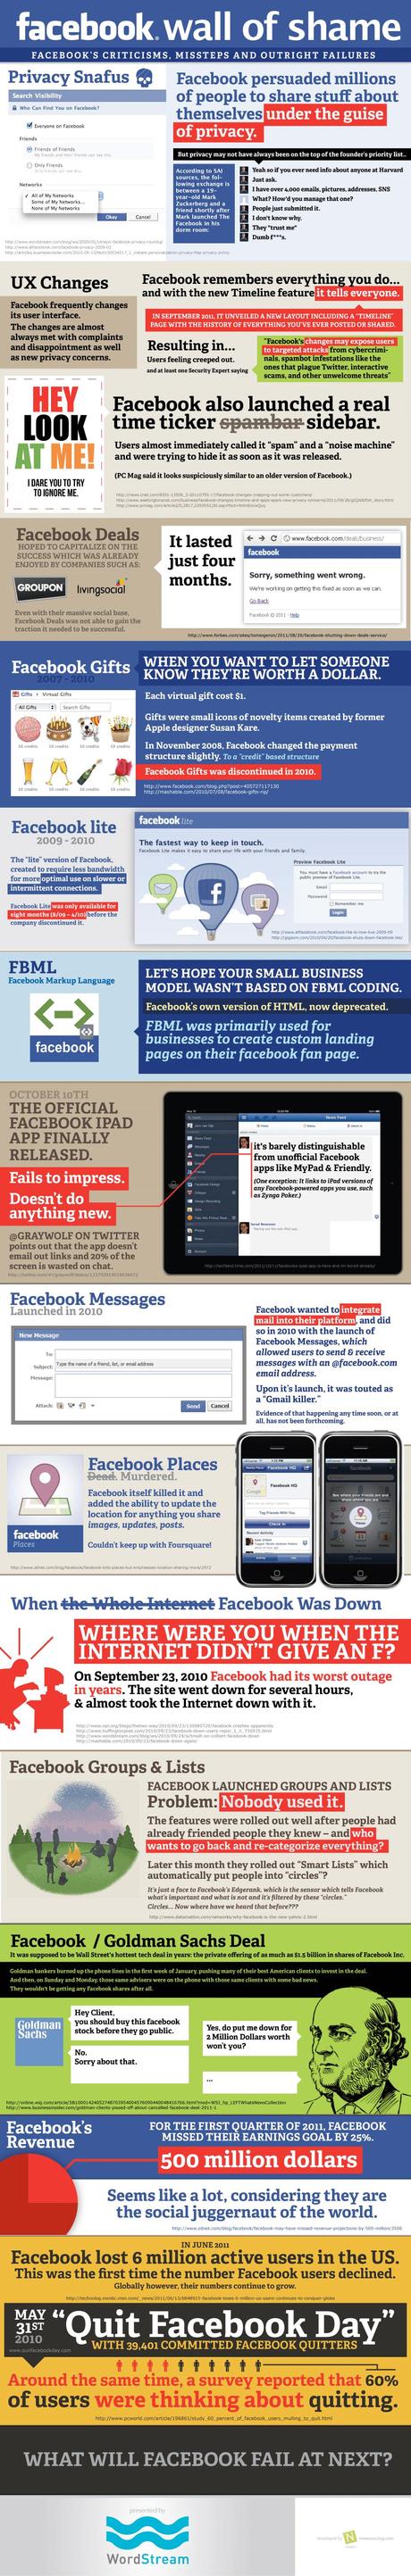 facebook failures Facebook : The Wall of Shame